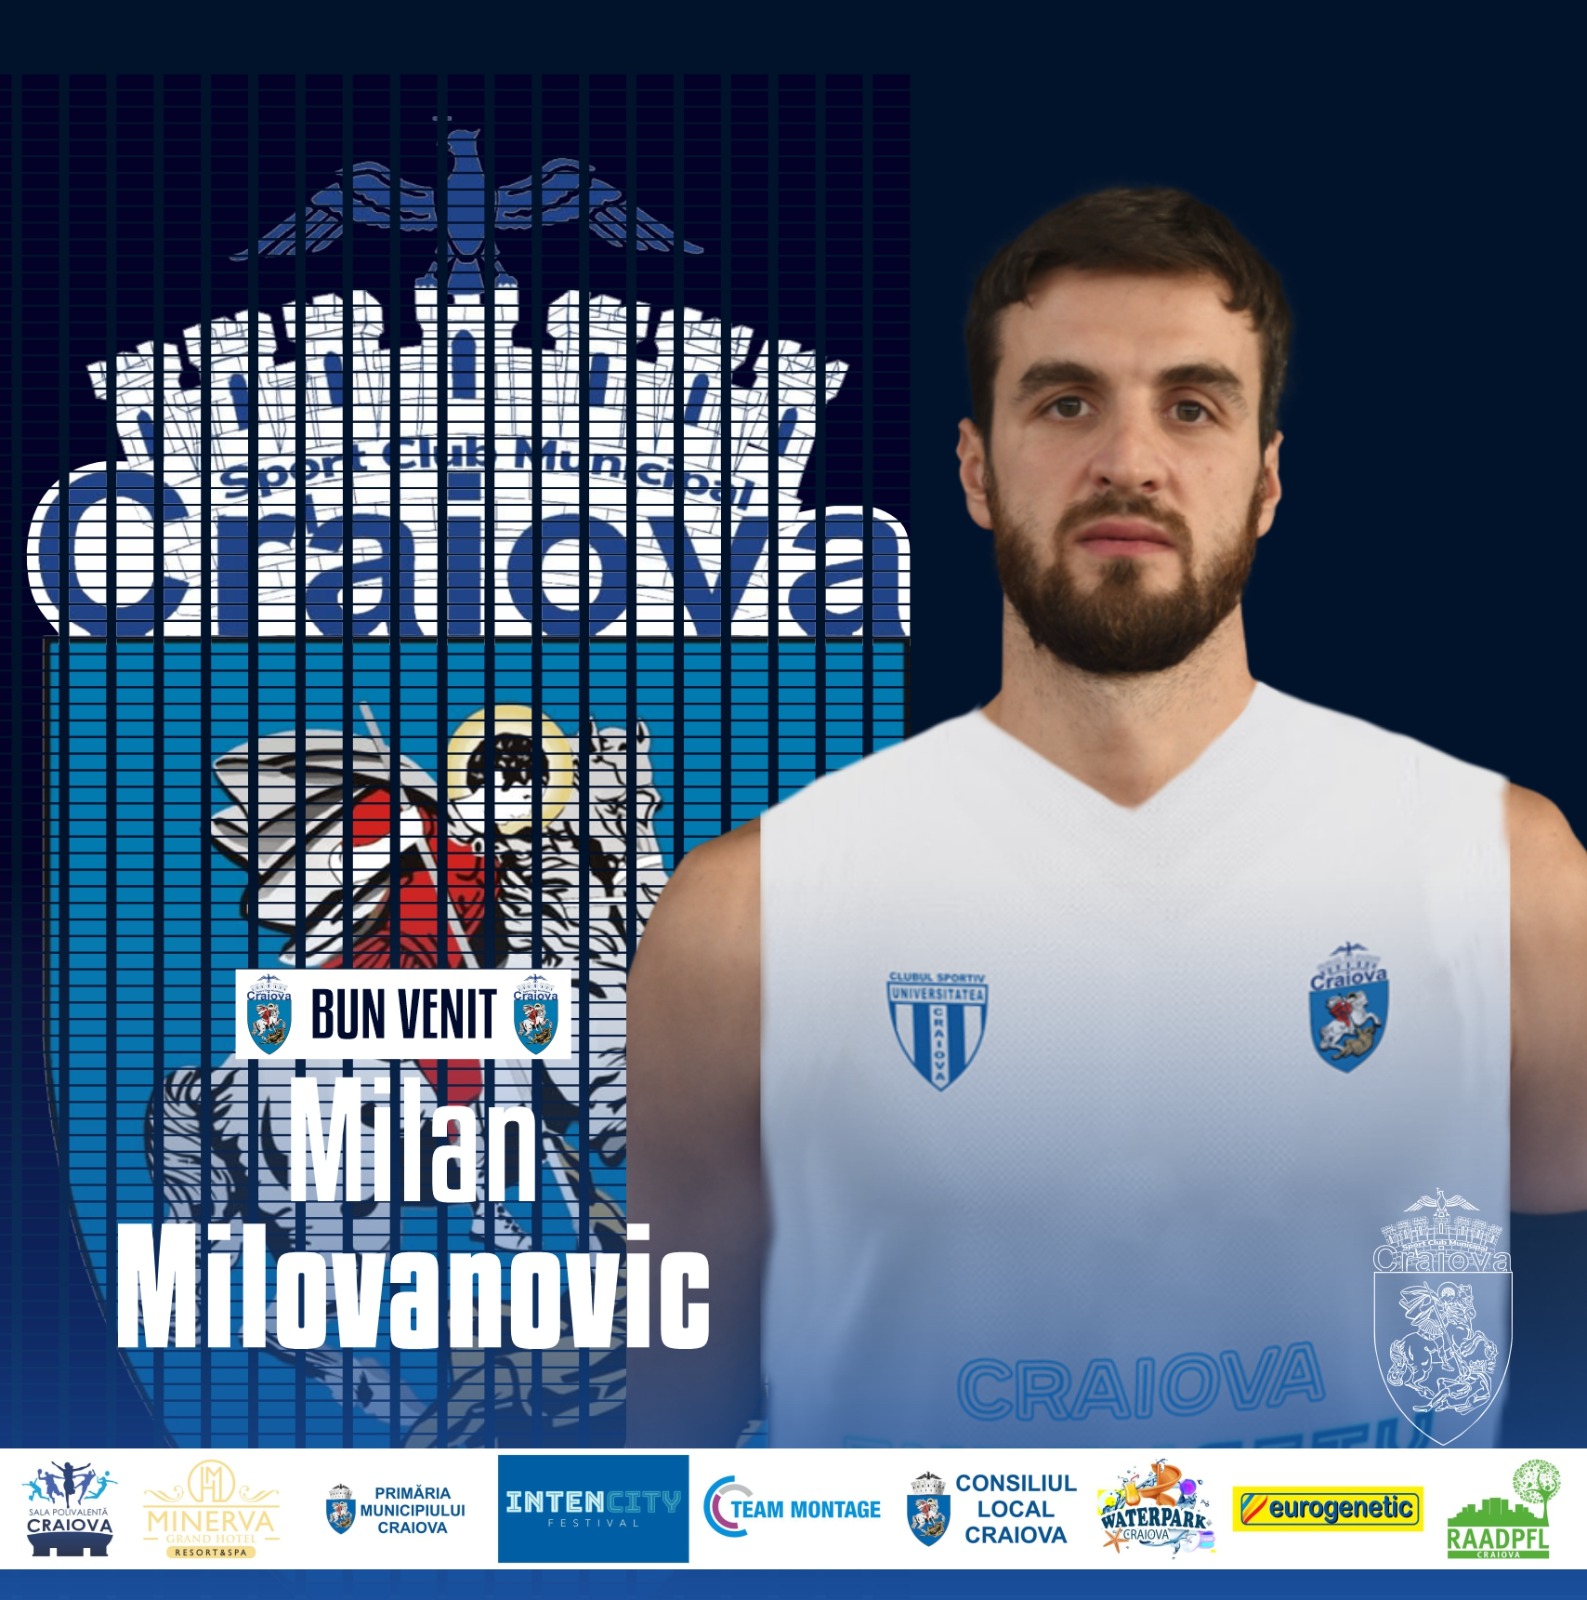 OFICIAL I Bun venit, Milan Milovanovic!